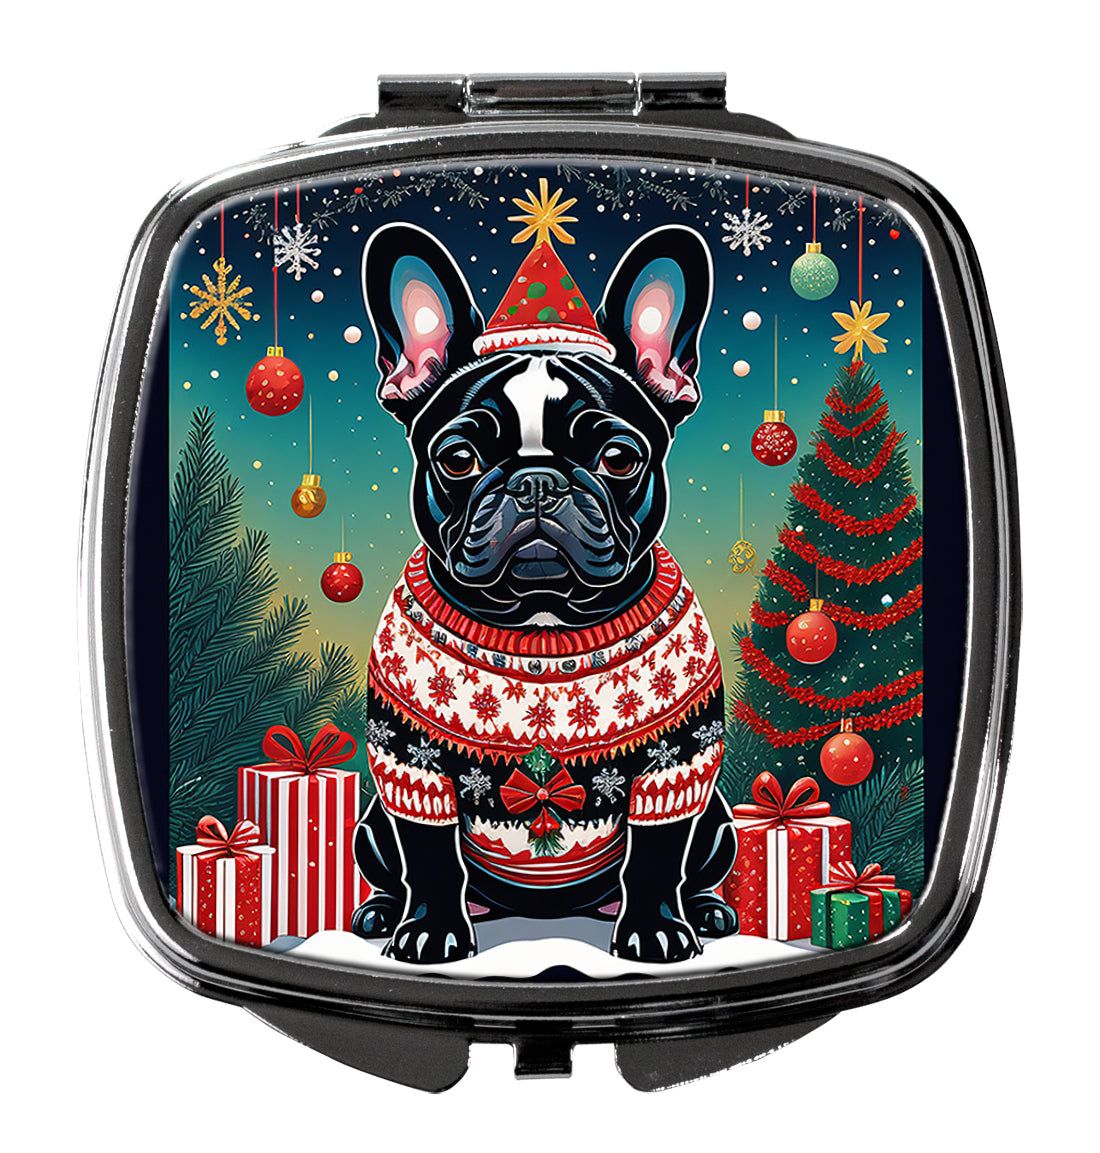 Buy this Black French Bulldog Christmas Compact Mirror